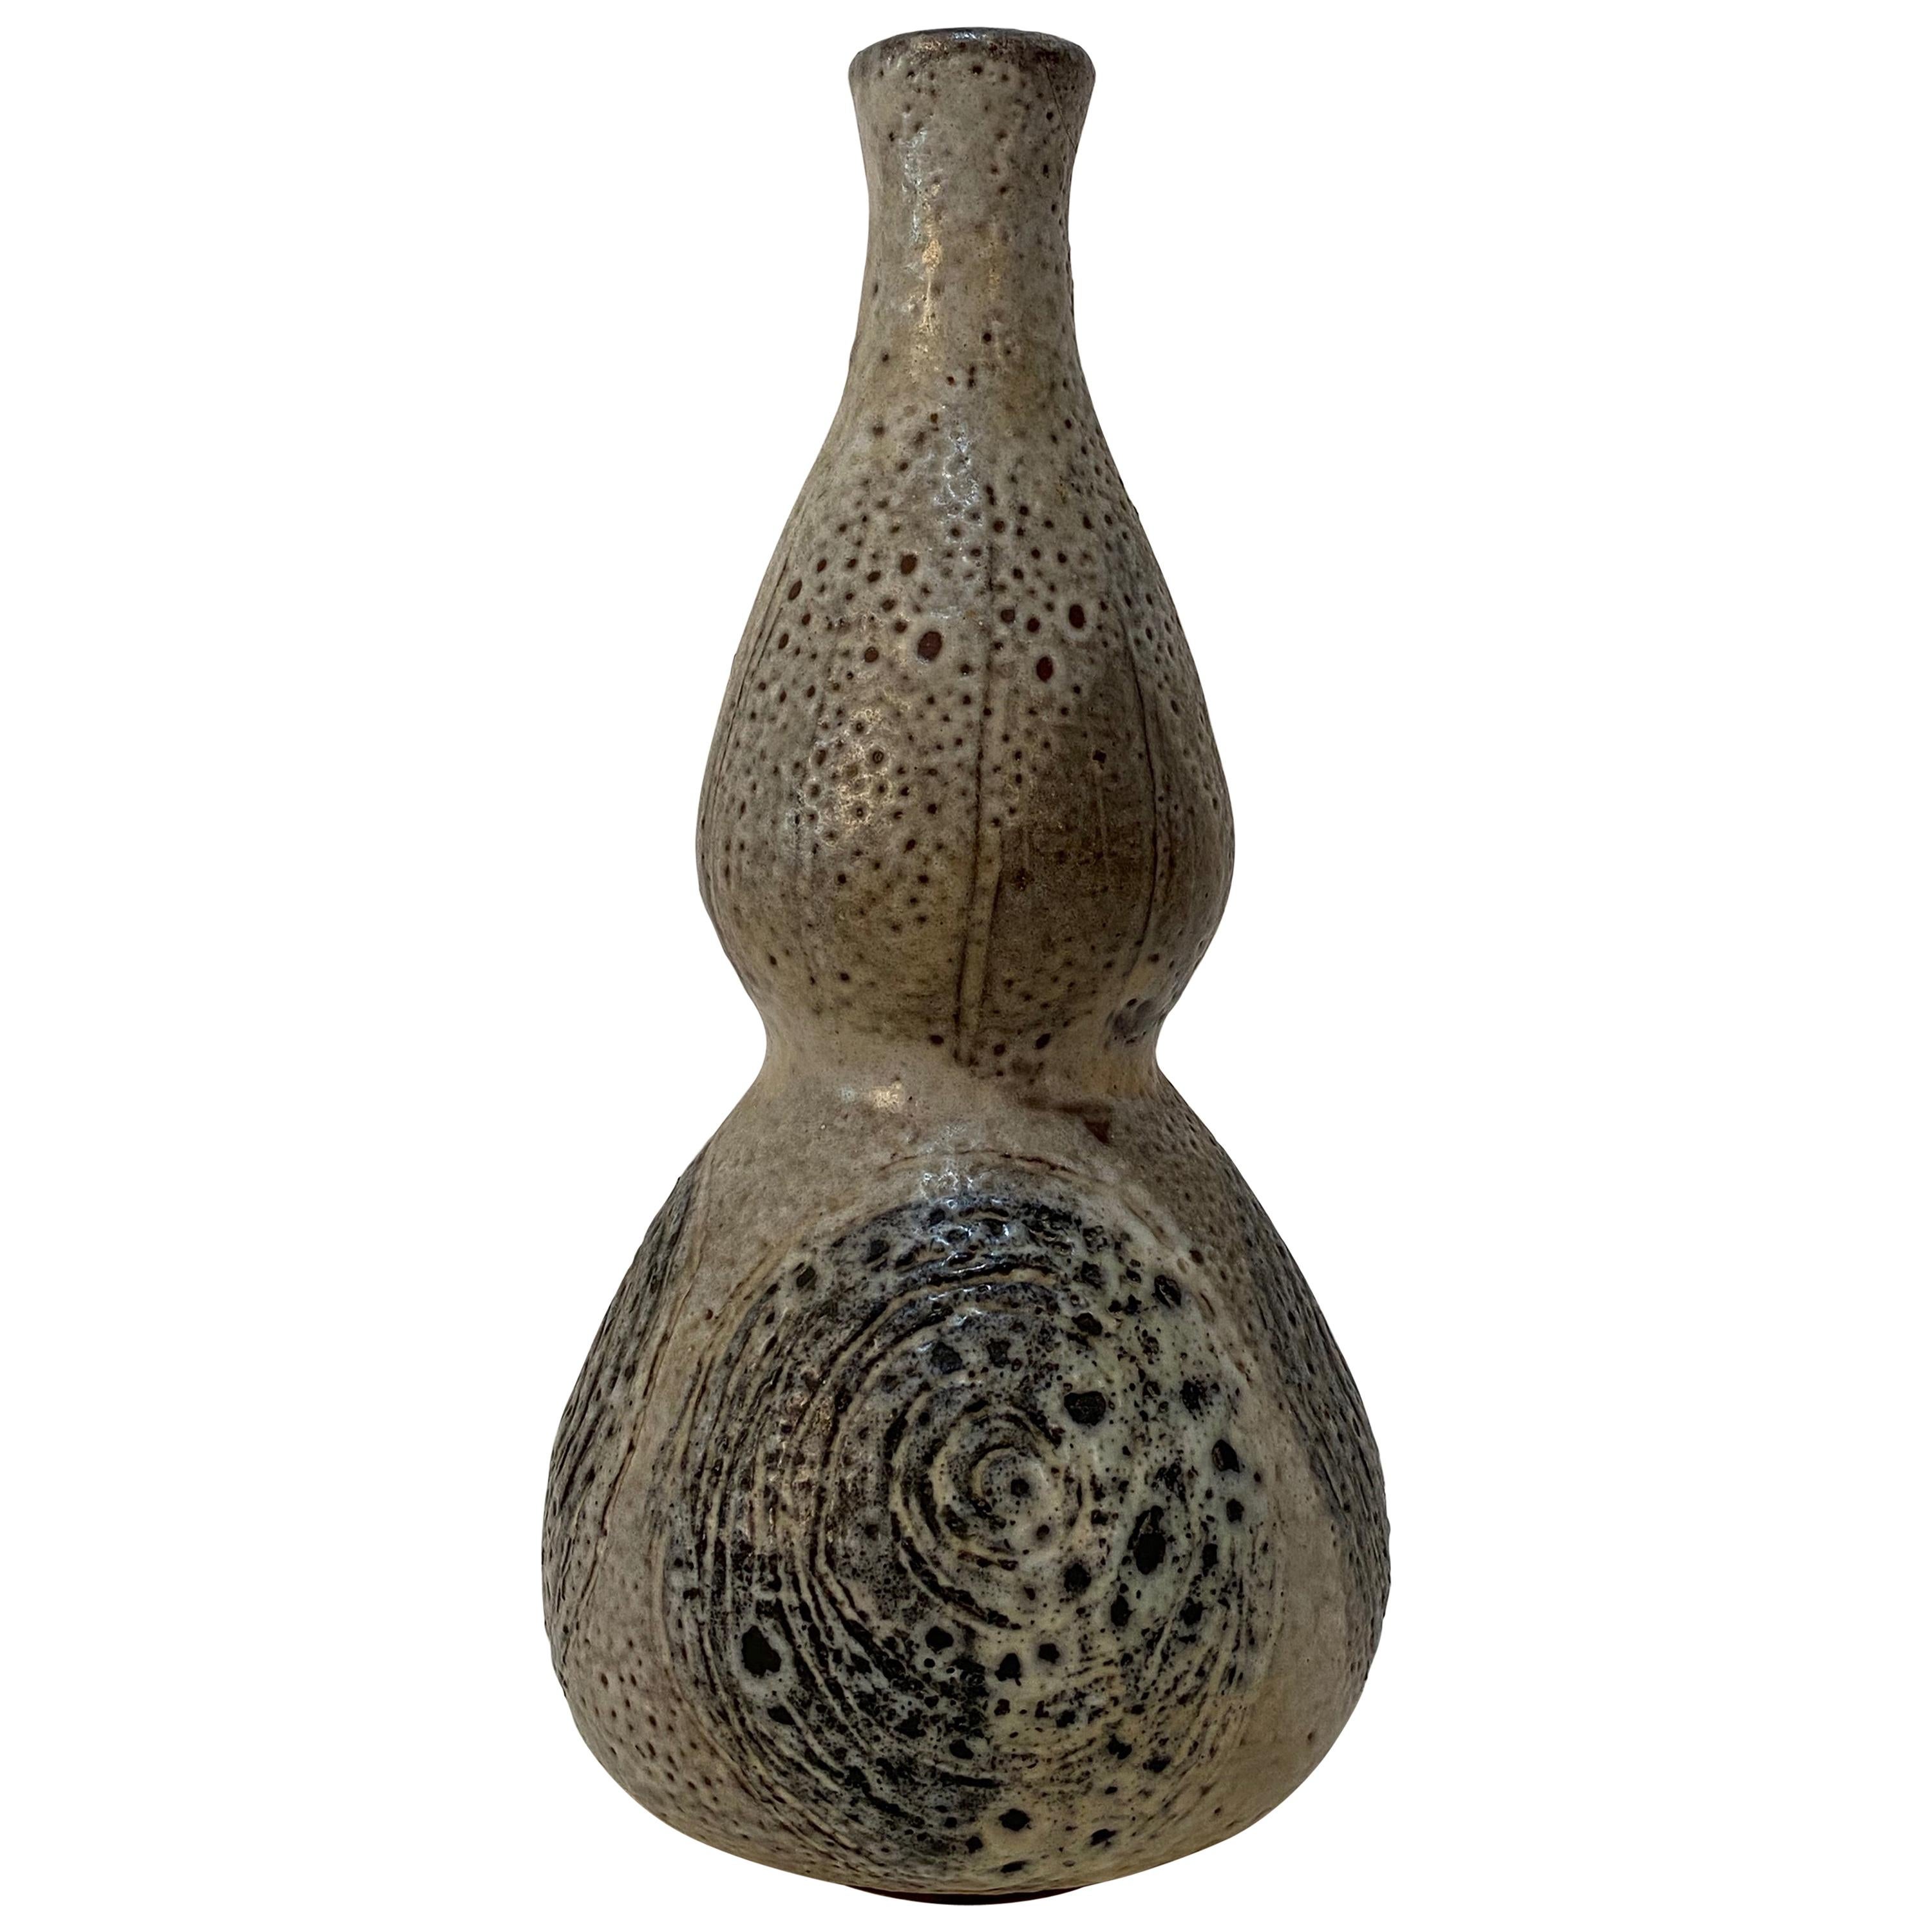 Brutalist Studio Pottery "Hourglass" Vase Signed Inge